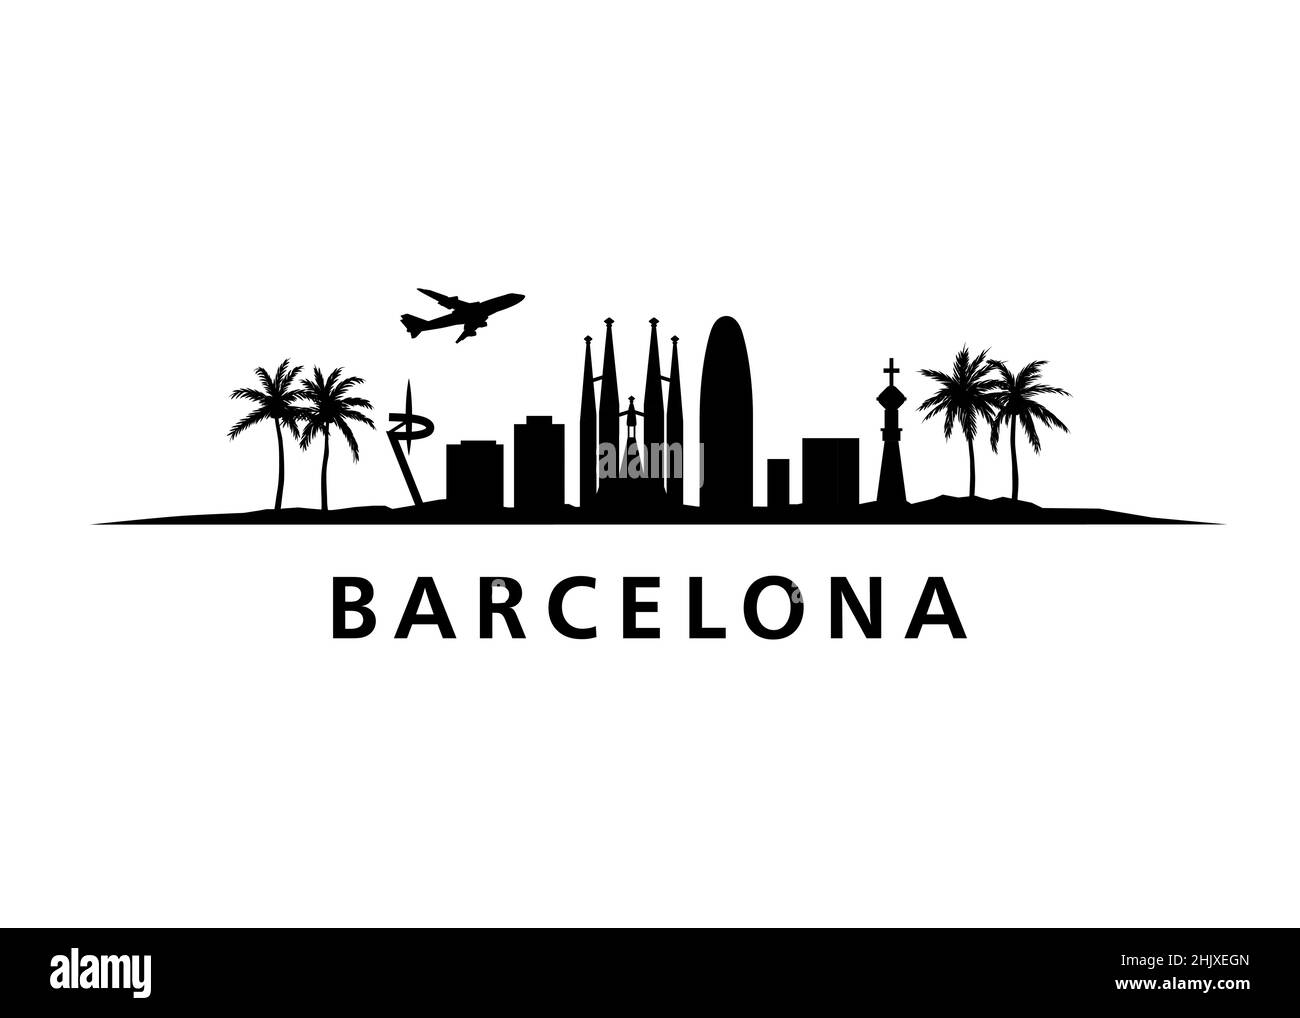 Barcelona Skyline Landscape City Silhouette Buildings Stock Vector